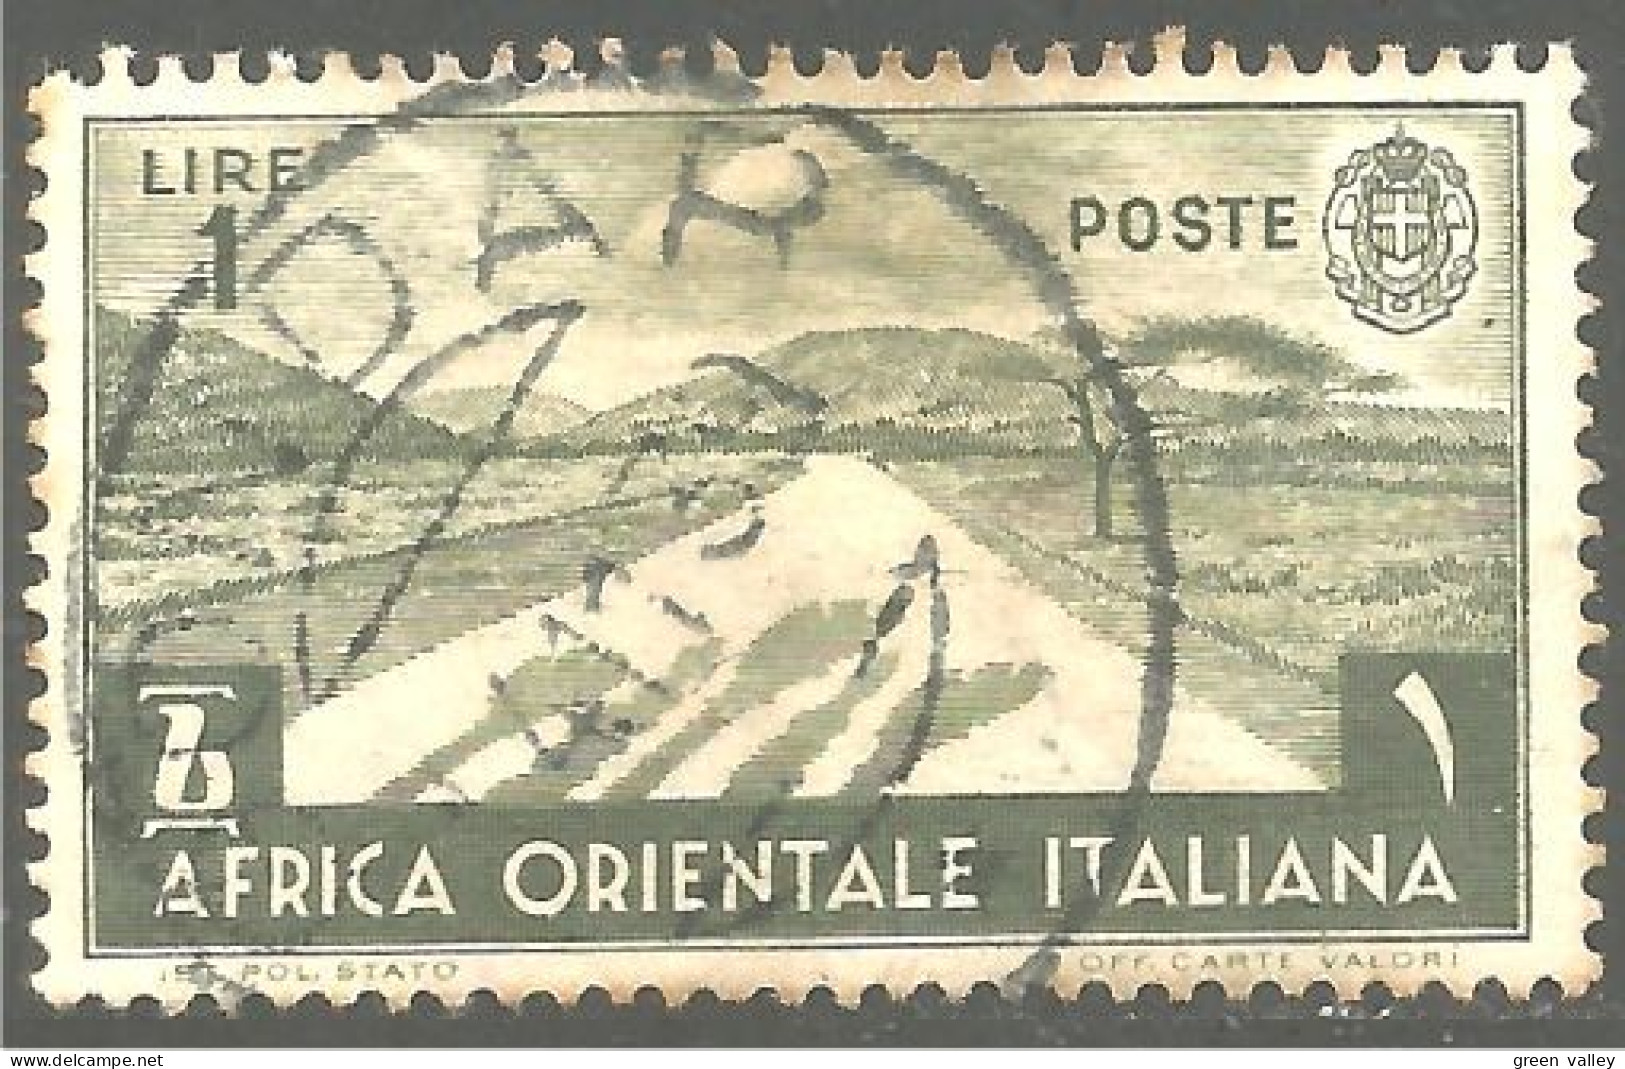 521 Africa Orientale Italiana 1938 Route Desert Road (ITC-149) - Italian Eastern Africa